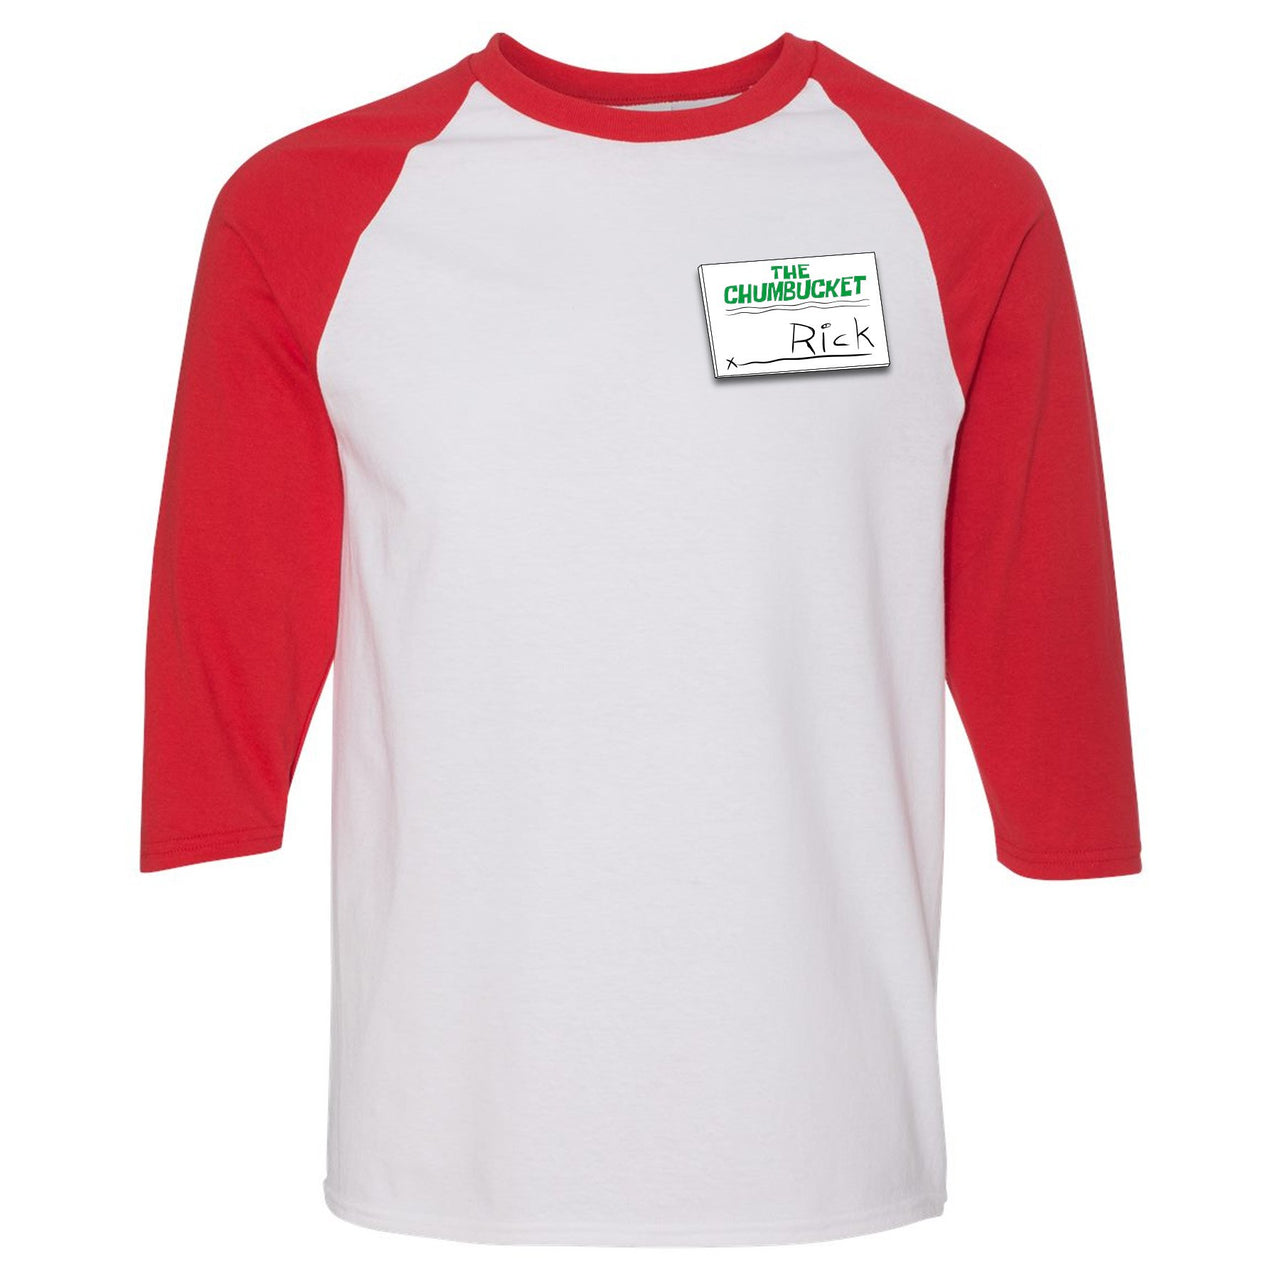 Patrick K5s Raglan T Shirt | Rick, White and Red